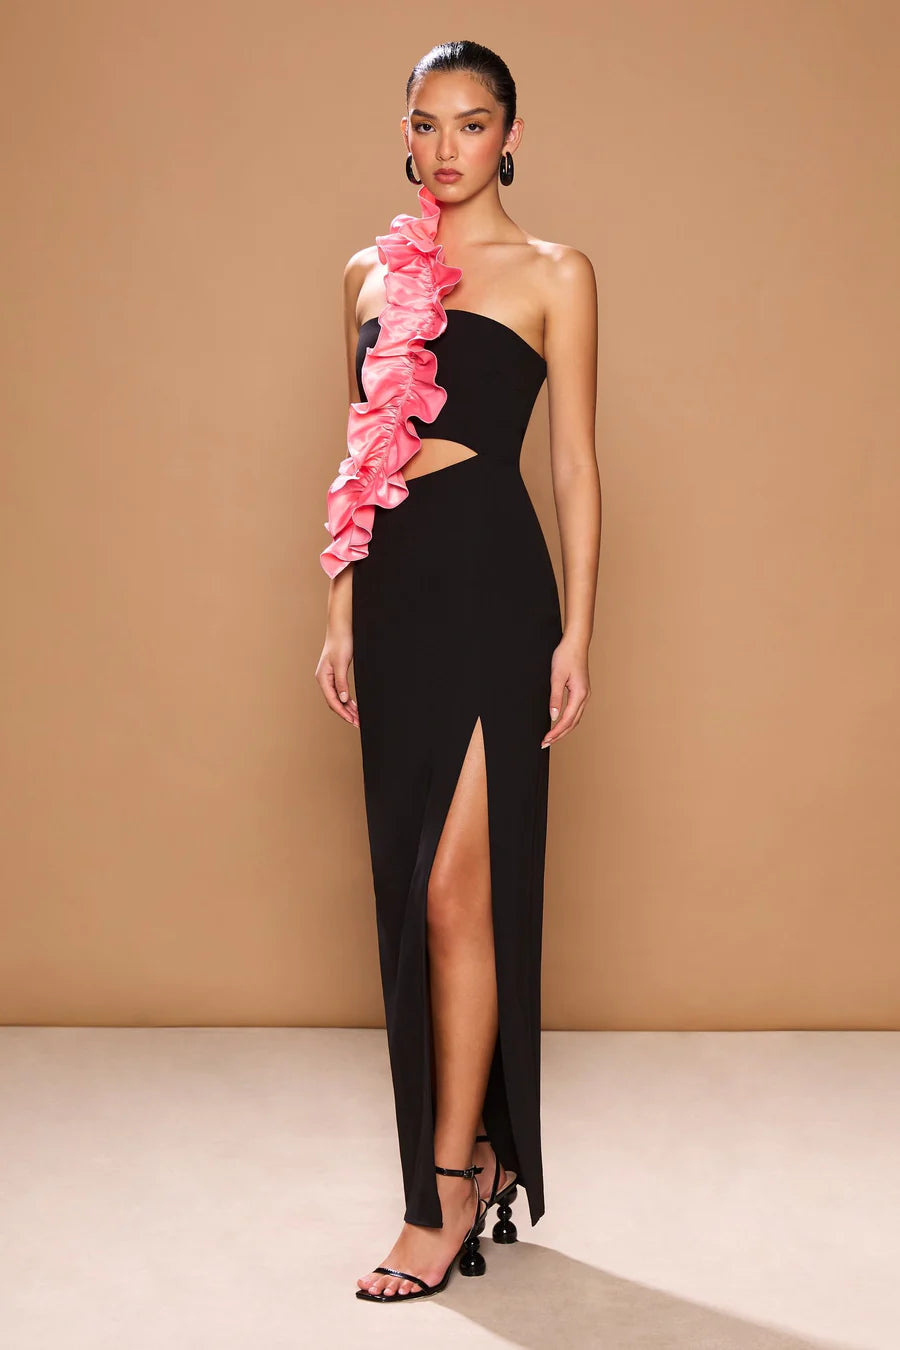 Praiano Rosa Dress - Black Flamingo